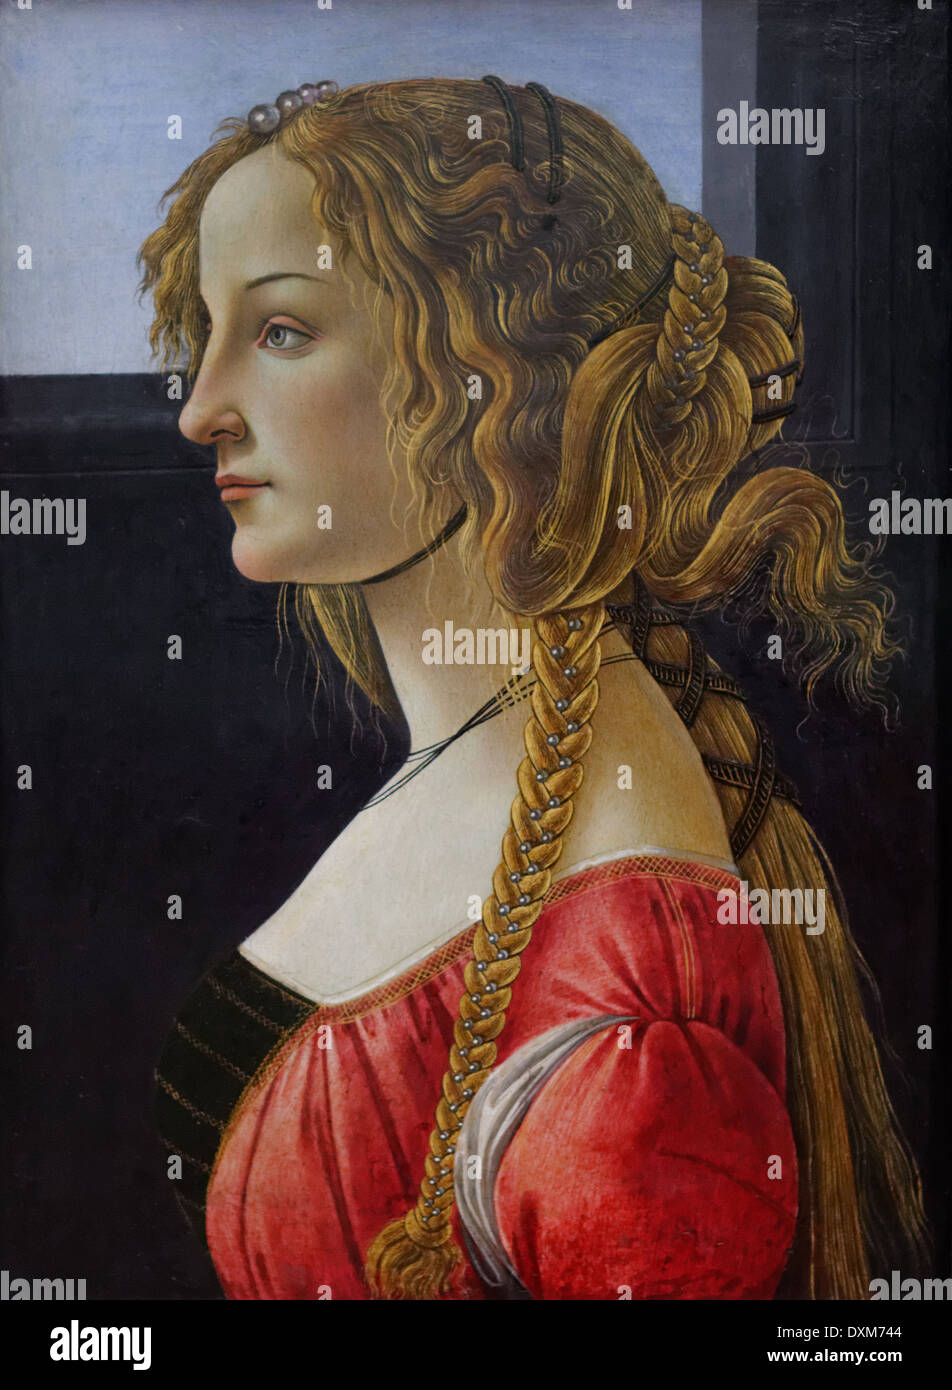 Sandro Botticelli - Perfil retrato de una joven - 1460 - Siglo XV - escuela de italiano - Gemäldegalerie - Berlín Foto de stock